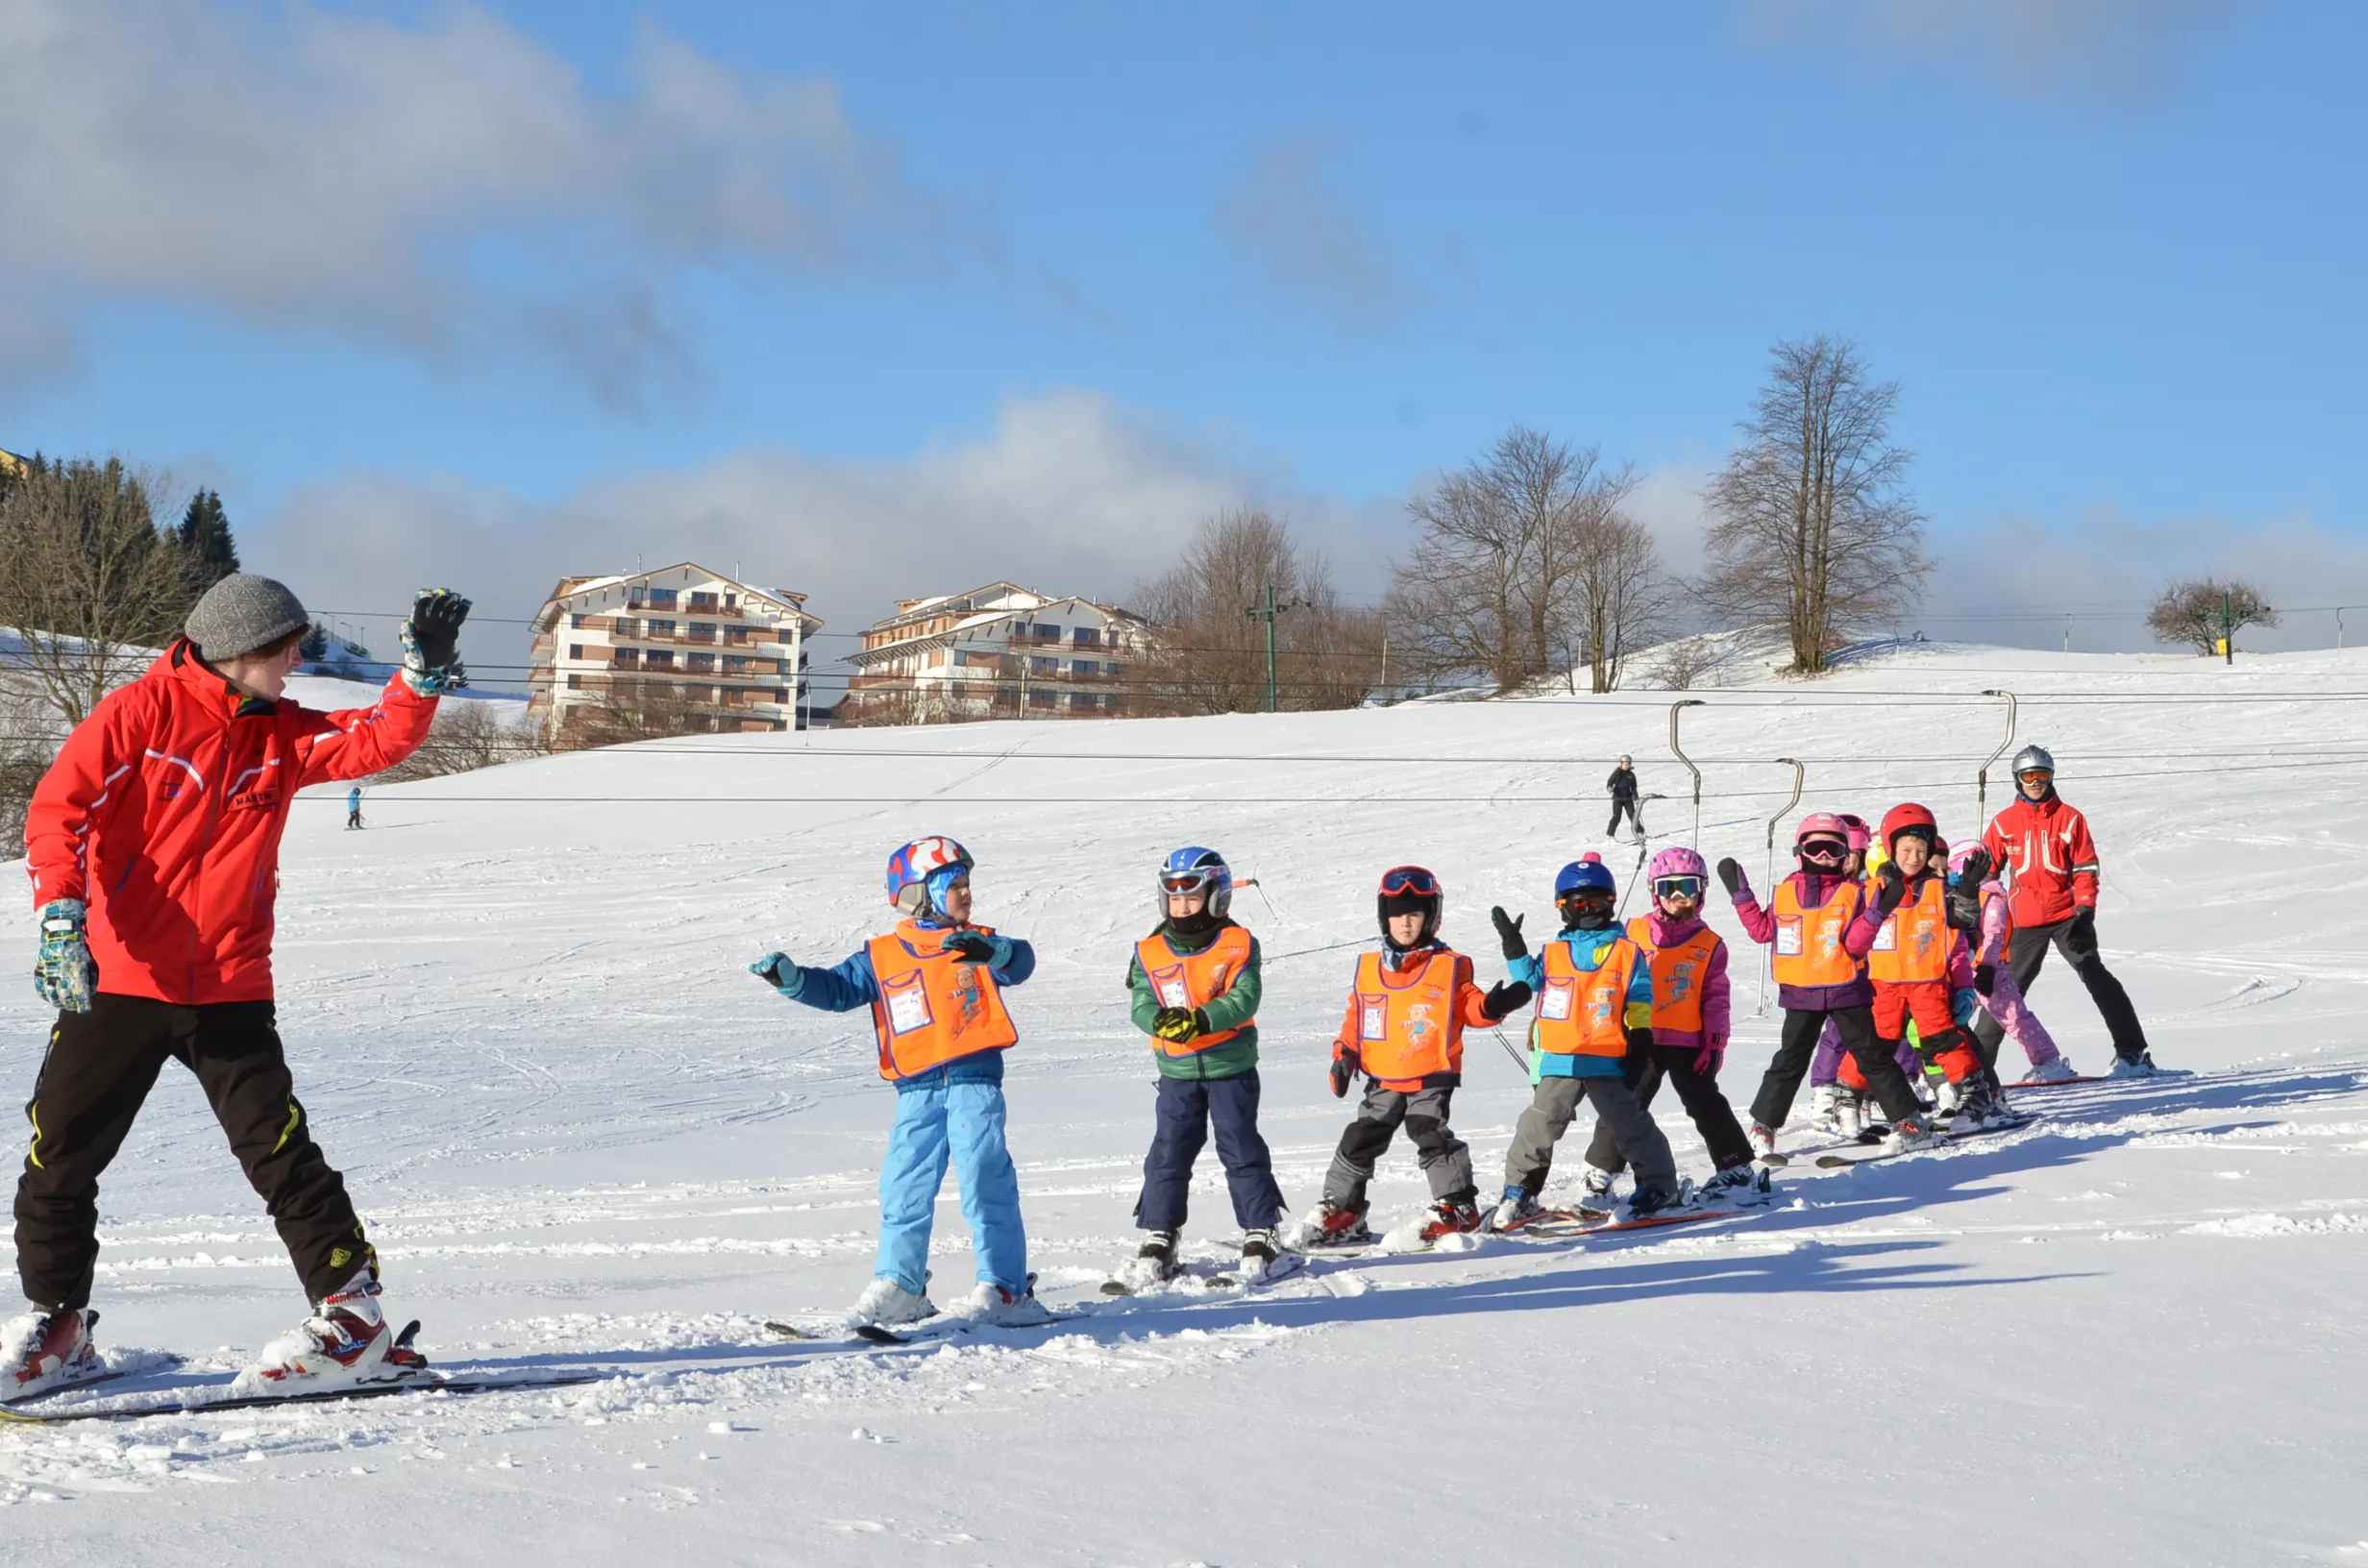 Patty Ski School&Rental in Slovakia, Europe | Snowboarding,Skiing - Rated 0.8